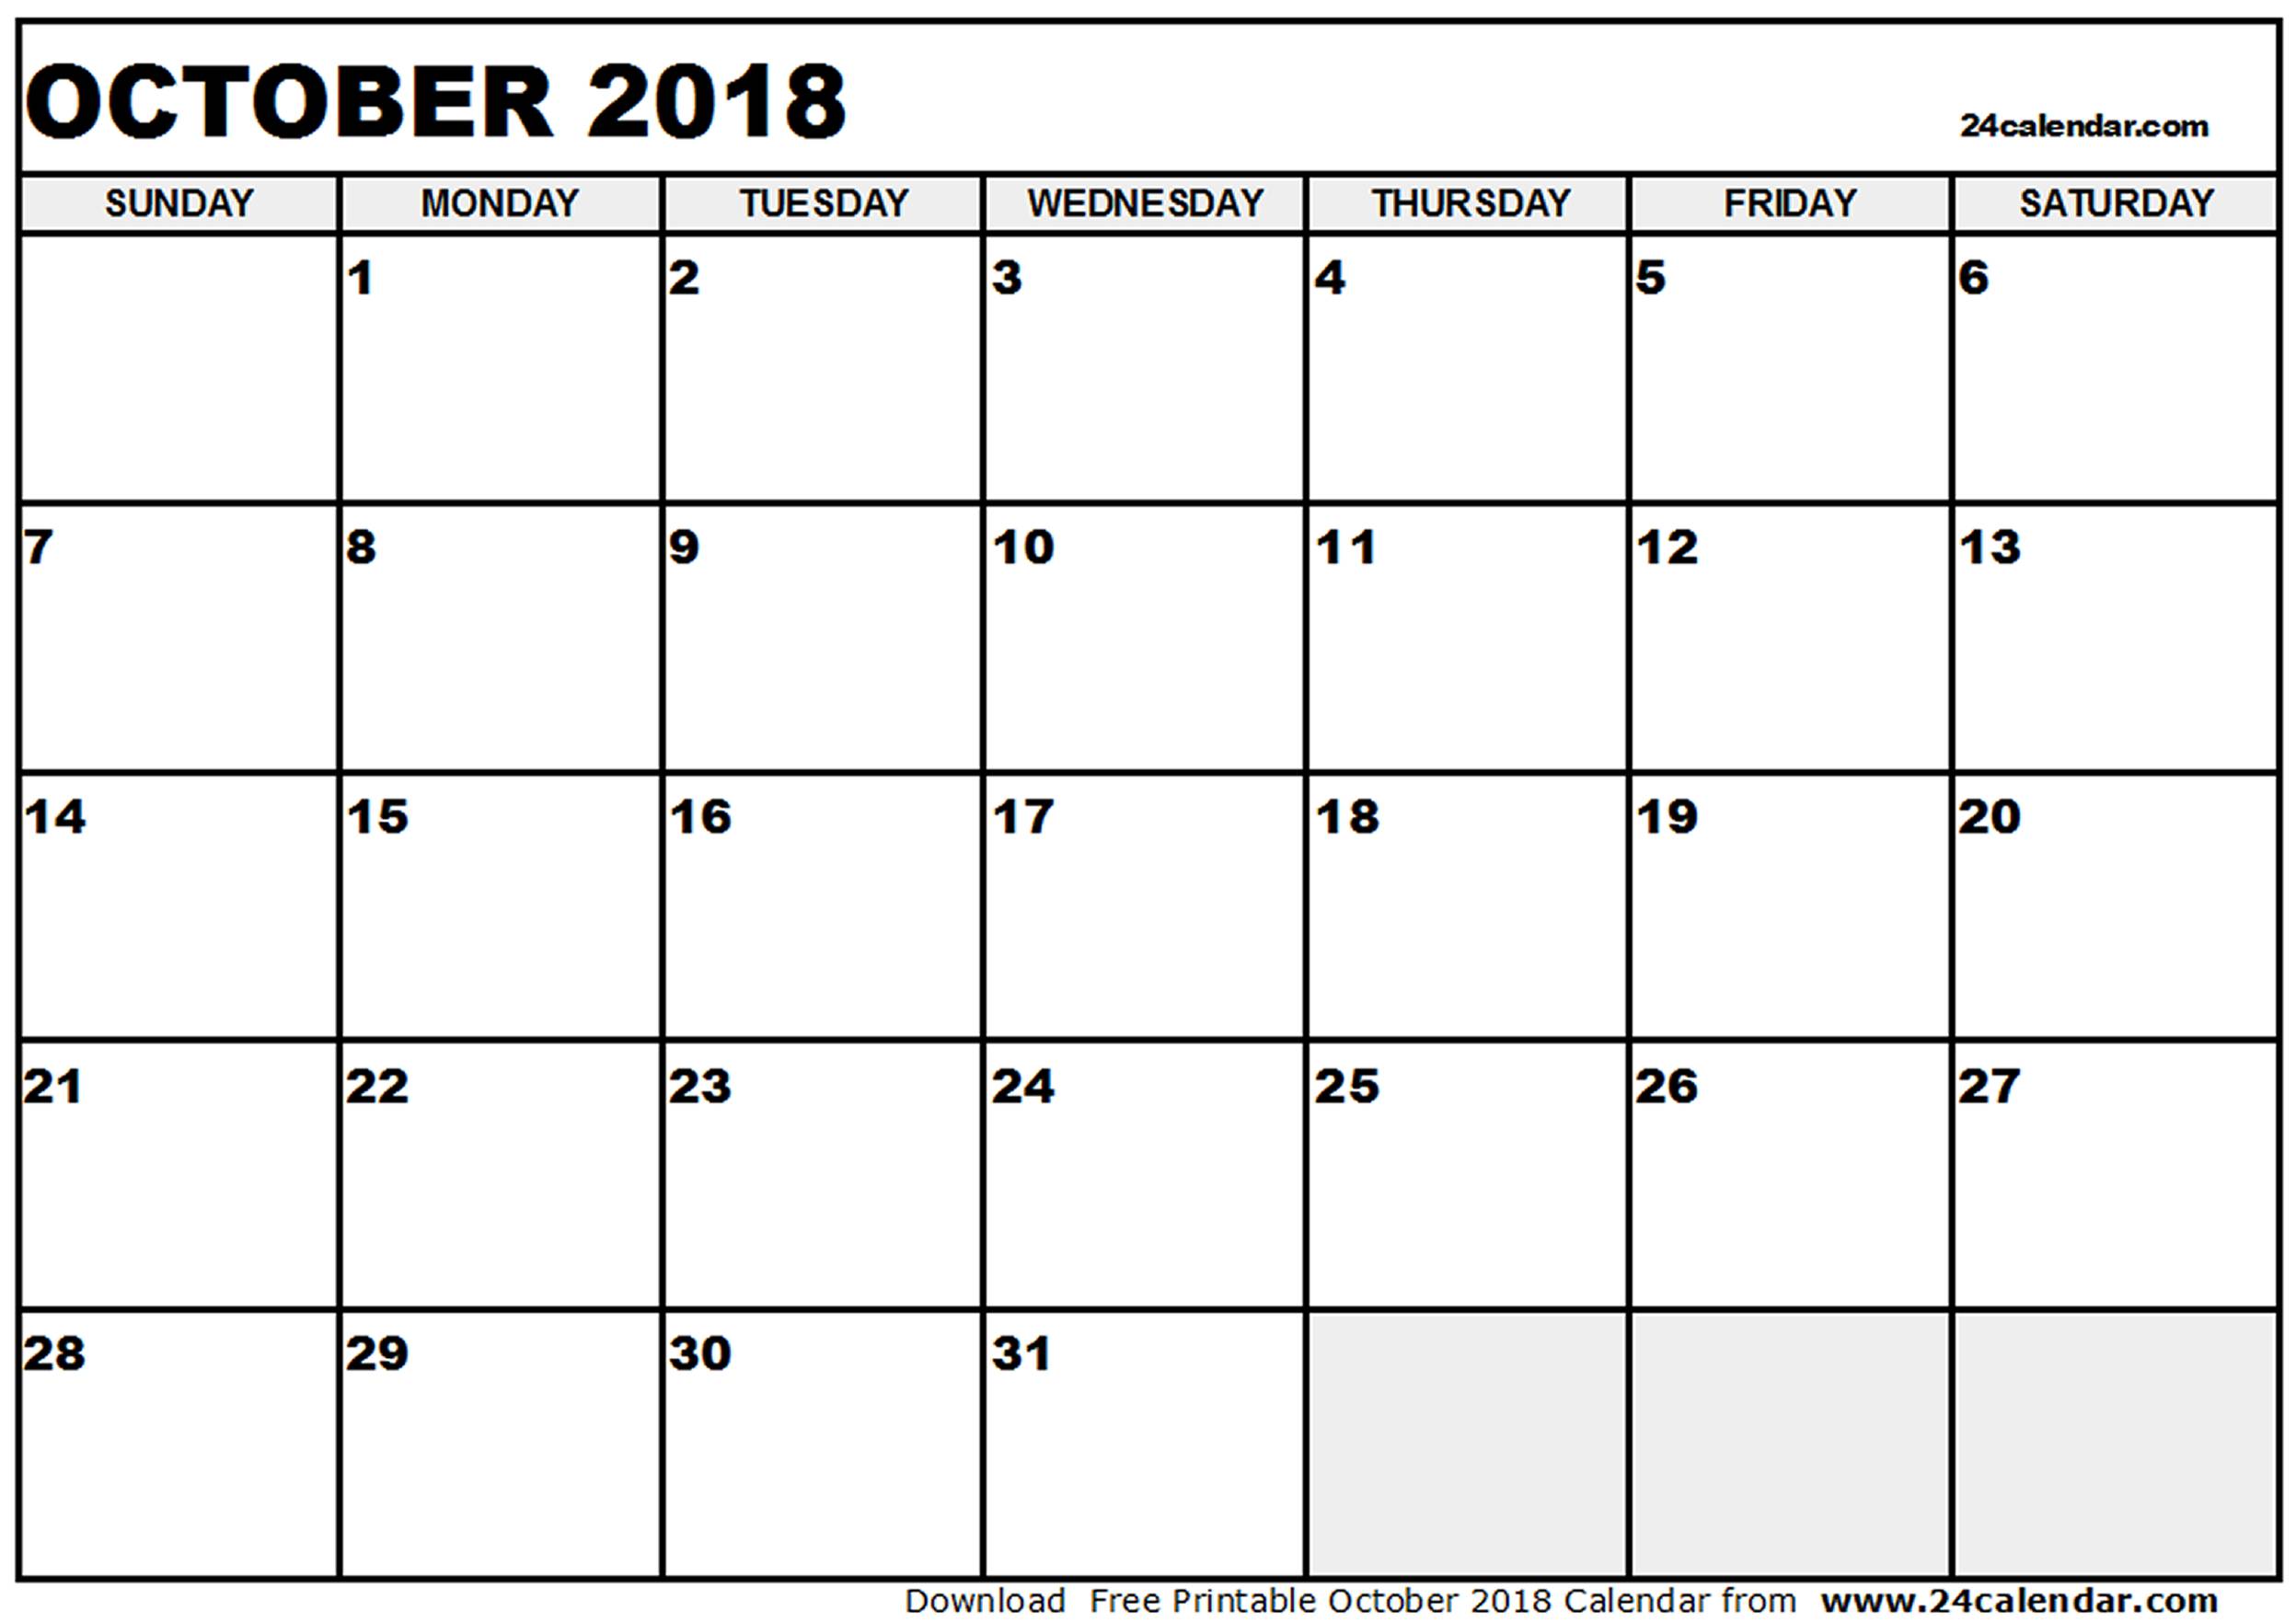 October 2018 calendar & October 2018 calendar printable